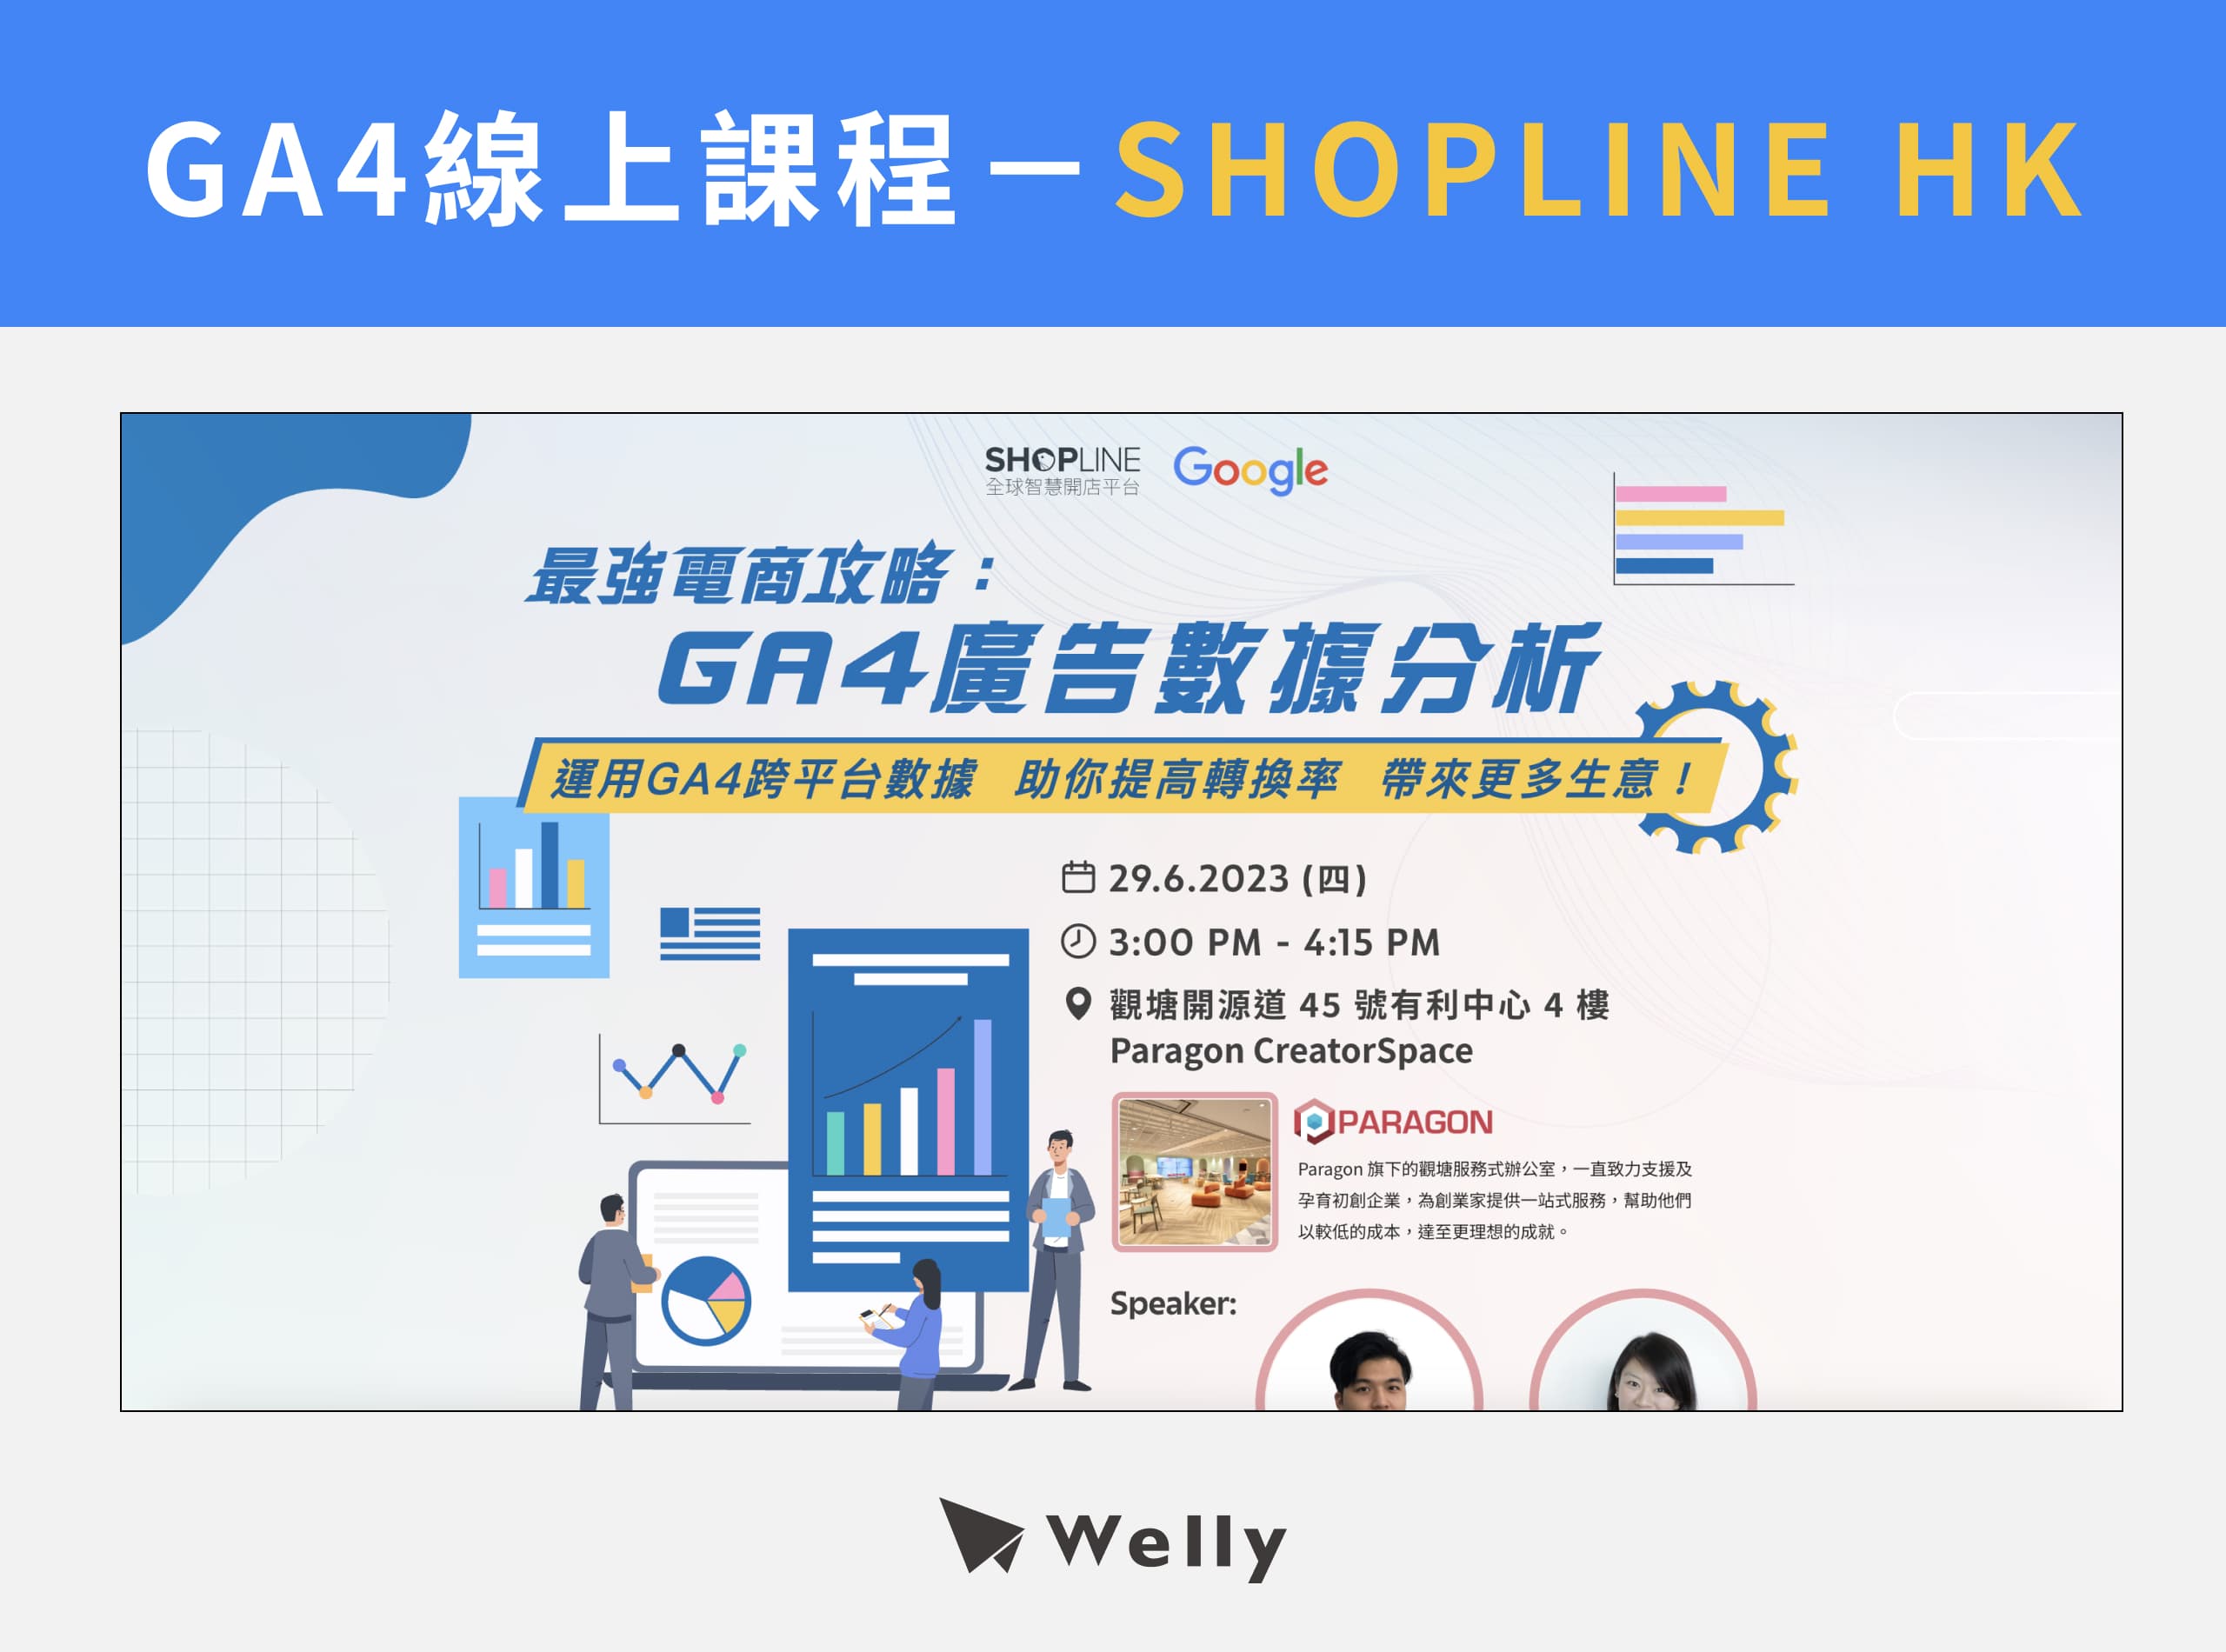 GA4-shopline hk